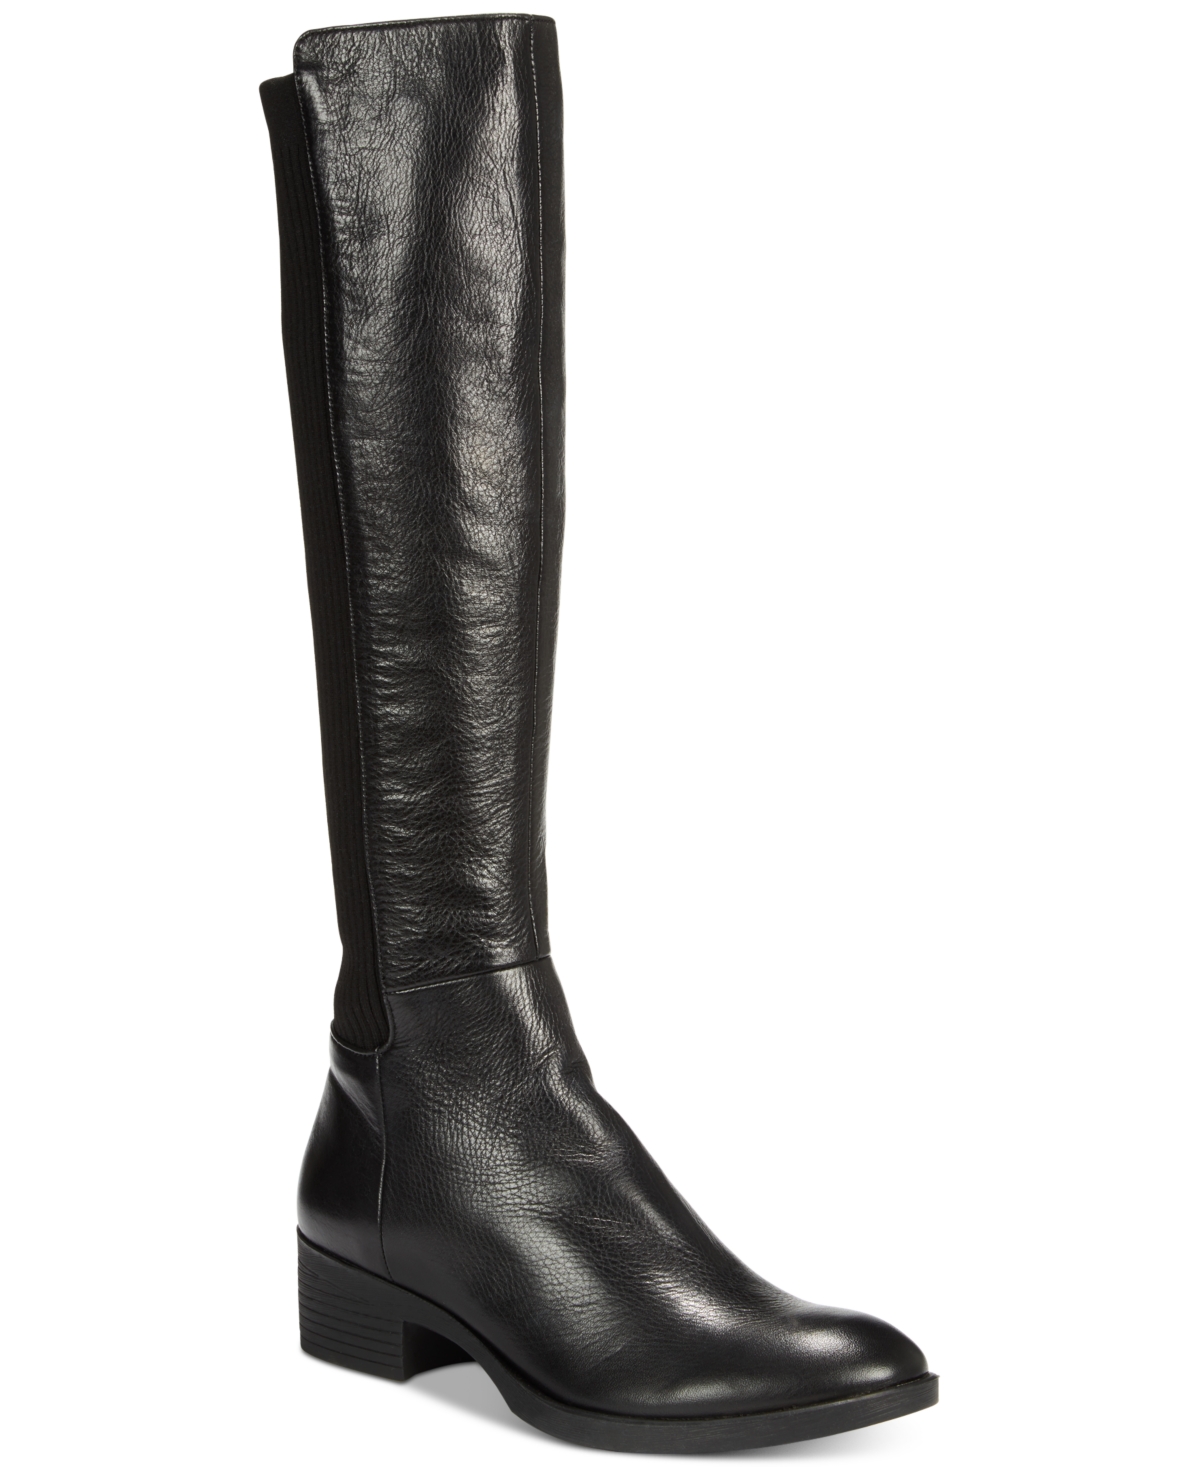 Women's Levon Tall Shaft Riding Boots - Black Suede